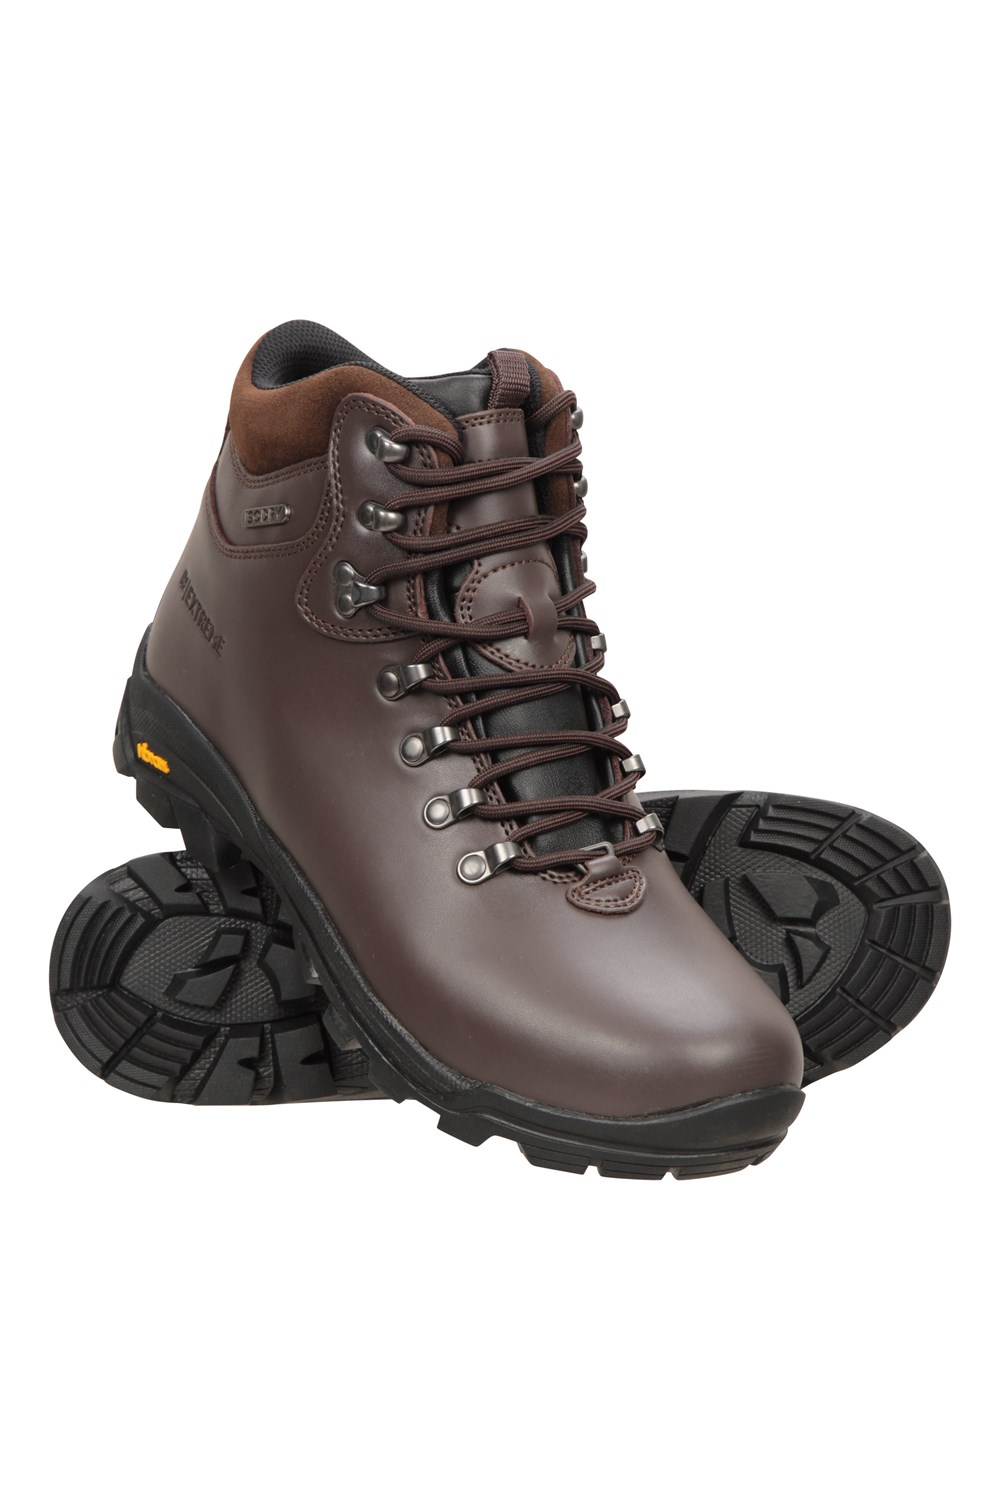 Mountain Warehouse Mens Extreme Waterproof Boots Vibram Sole Walking ...